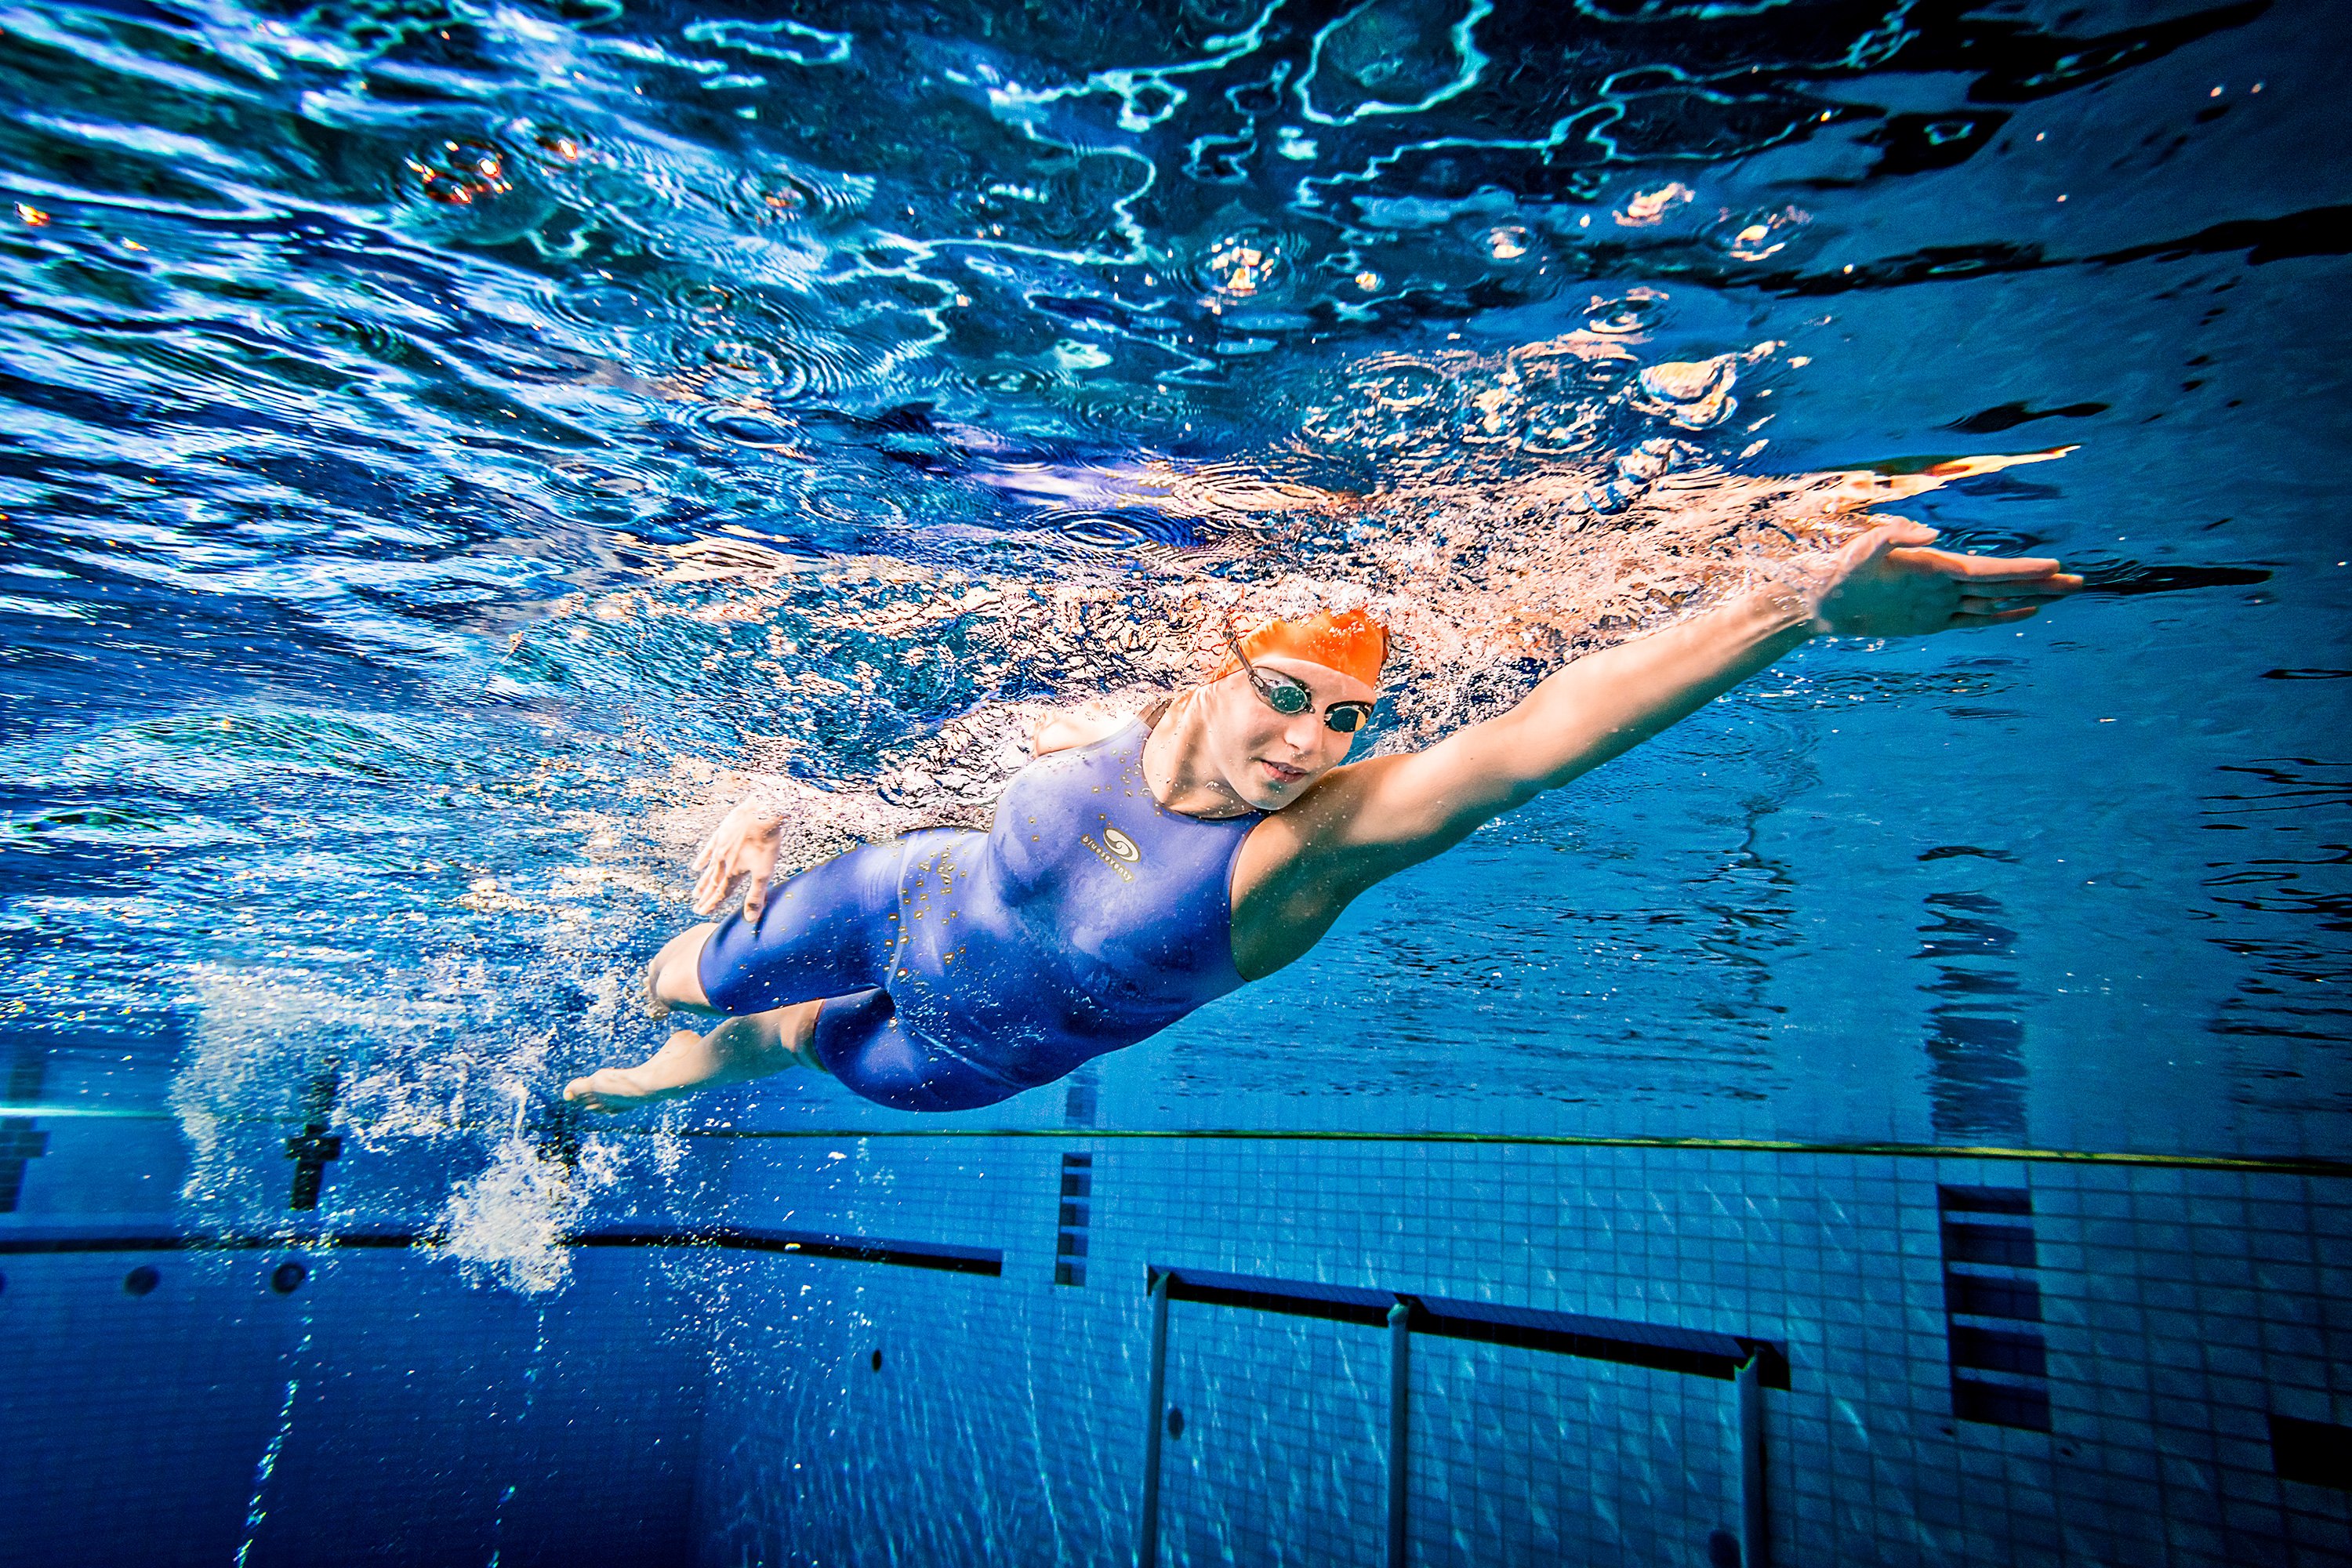 Спортсмен занимающийся плаванием